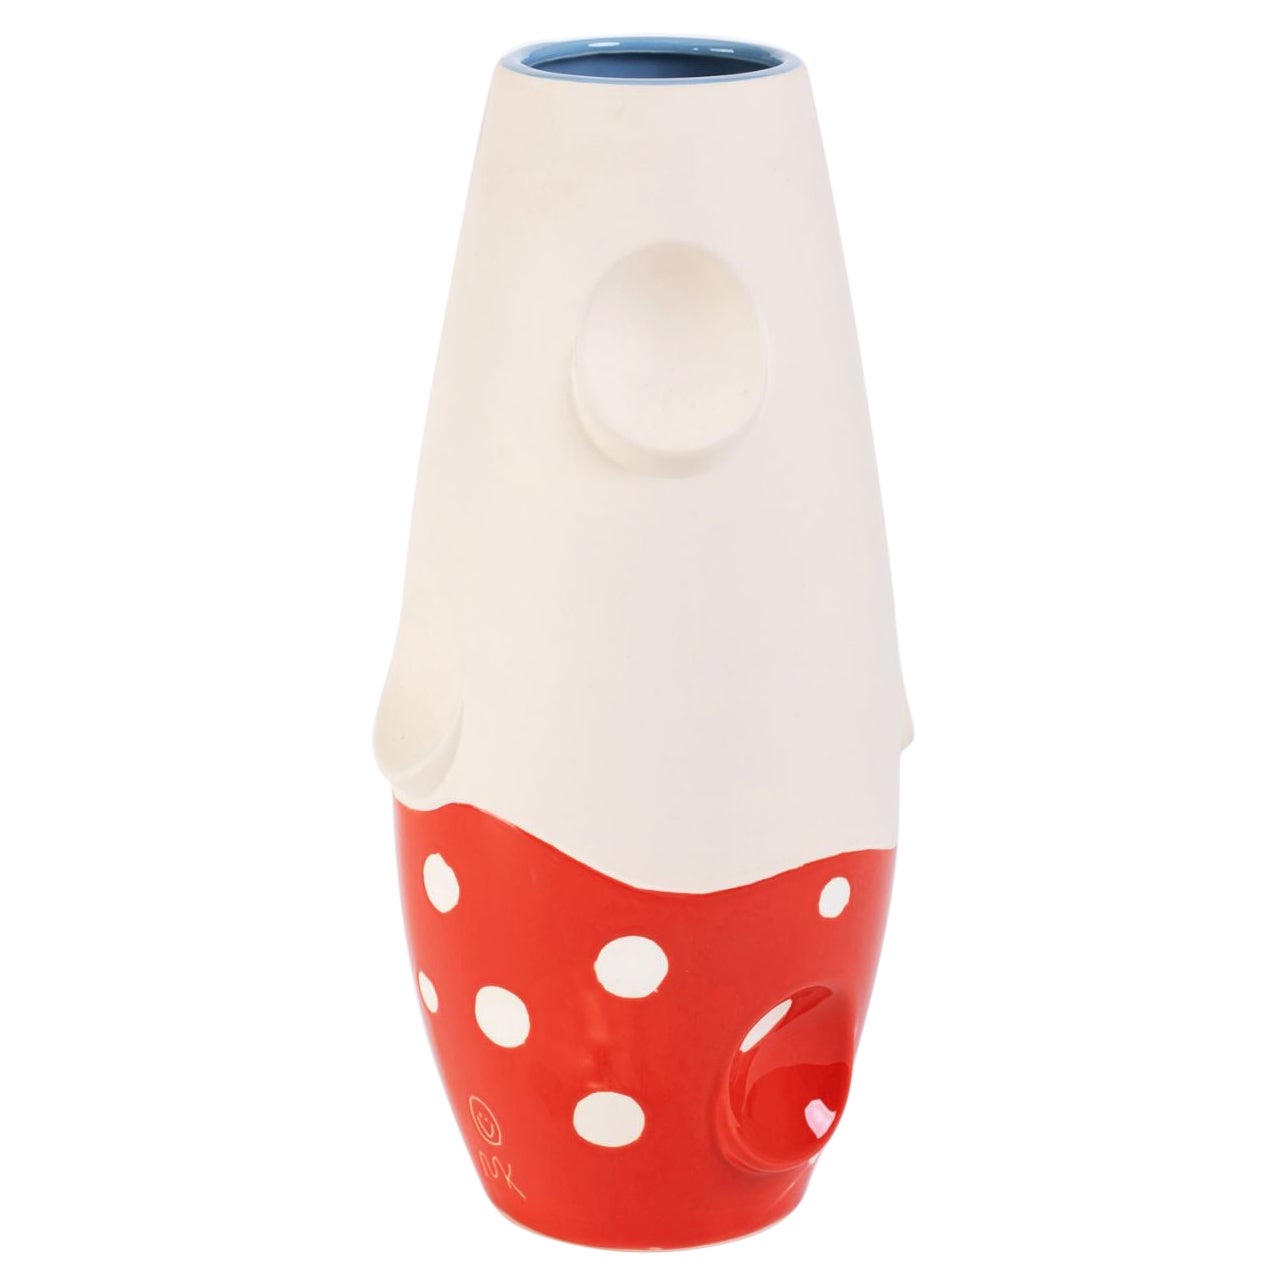 Oko Pop Ceramic Vase, Mushroom by Malwina Konopacka For Sale